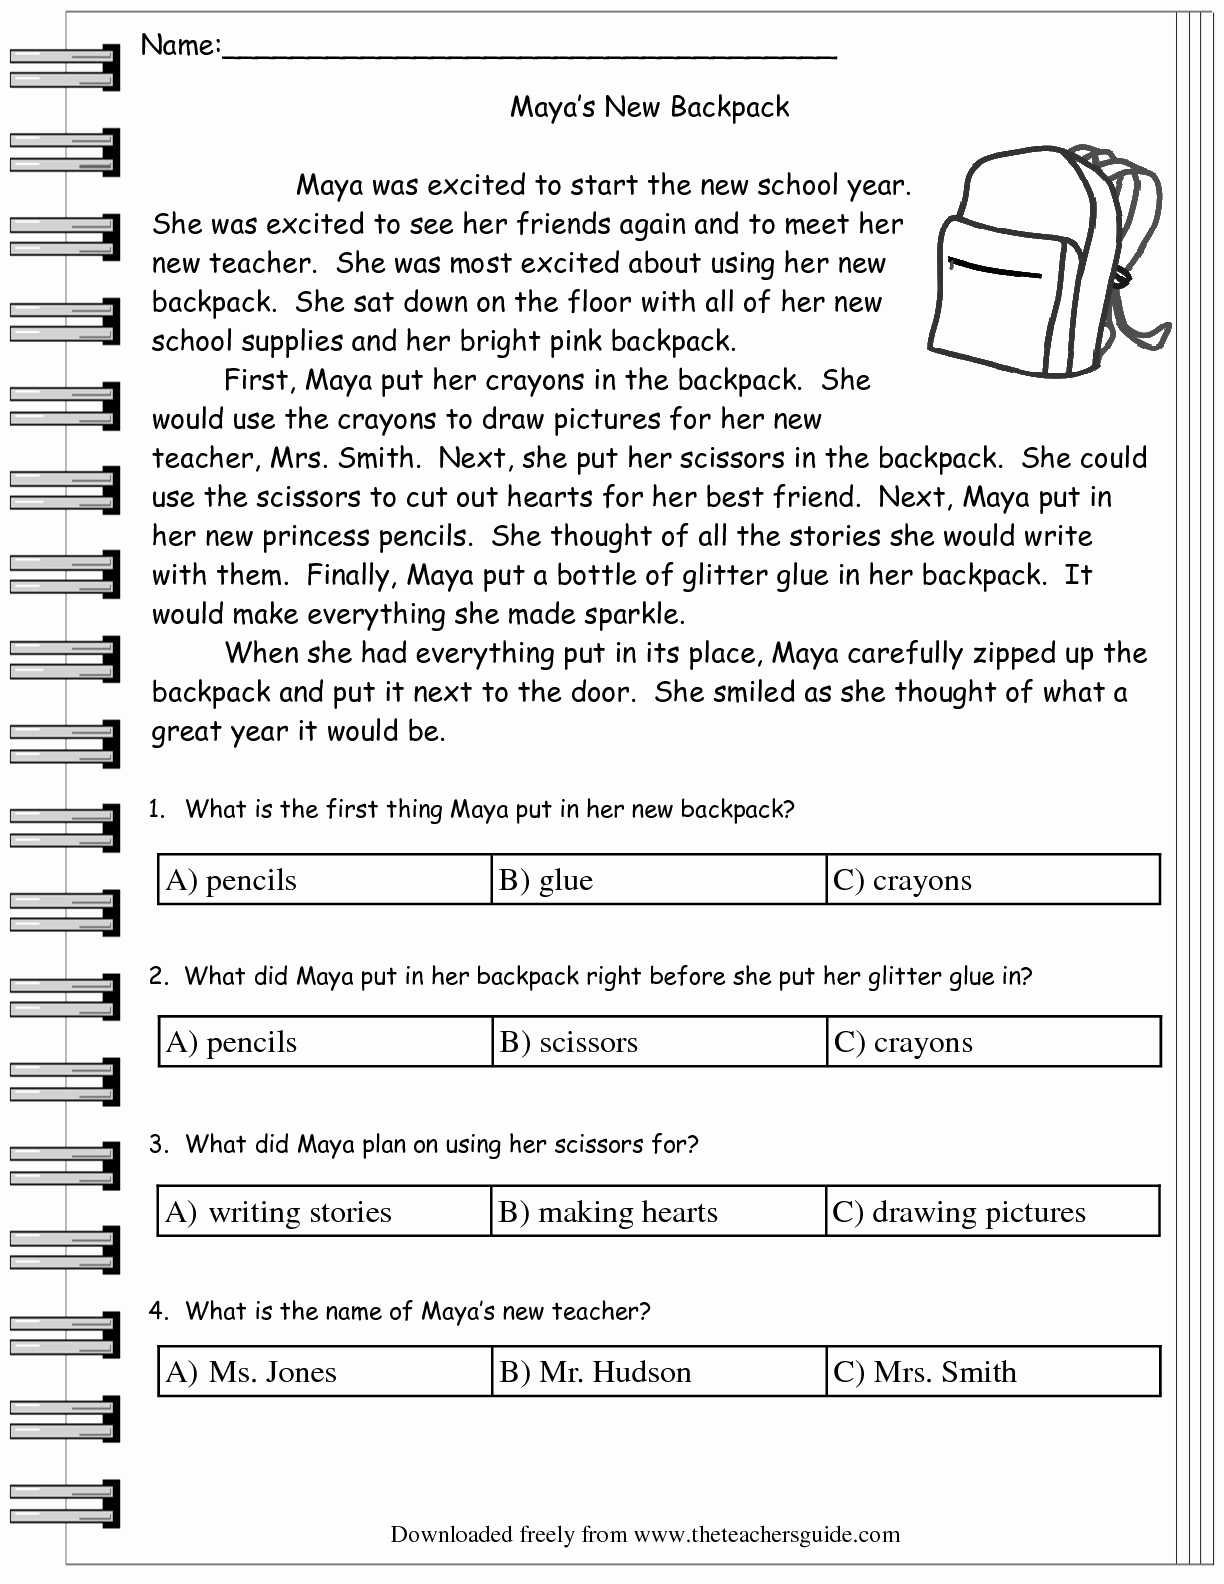 Free Printable Reading Comprehension Worksheets For 5Th Grade - Free | Free Printable Comprehension Worksheets For 5Th Grade